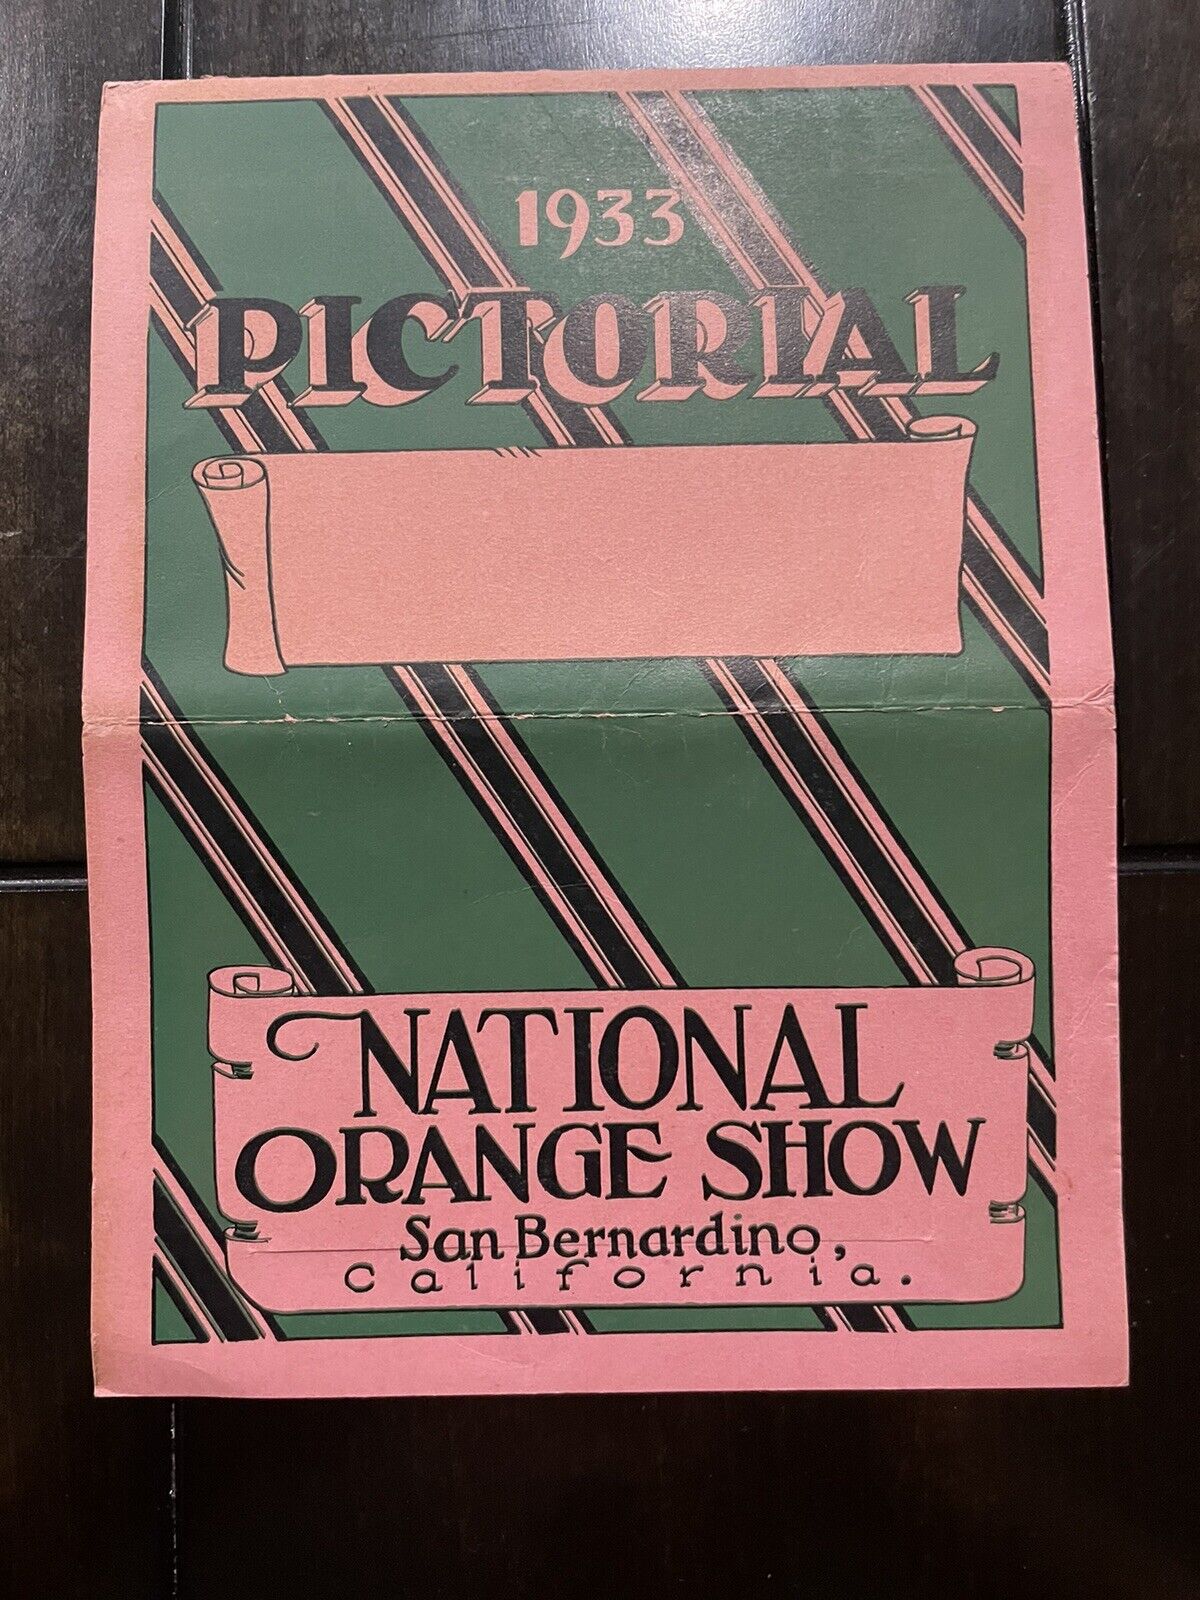 1933 Vintage Postcard Booklet from the National Orange Show